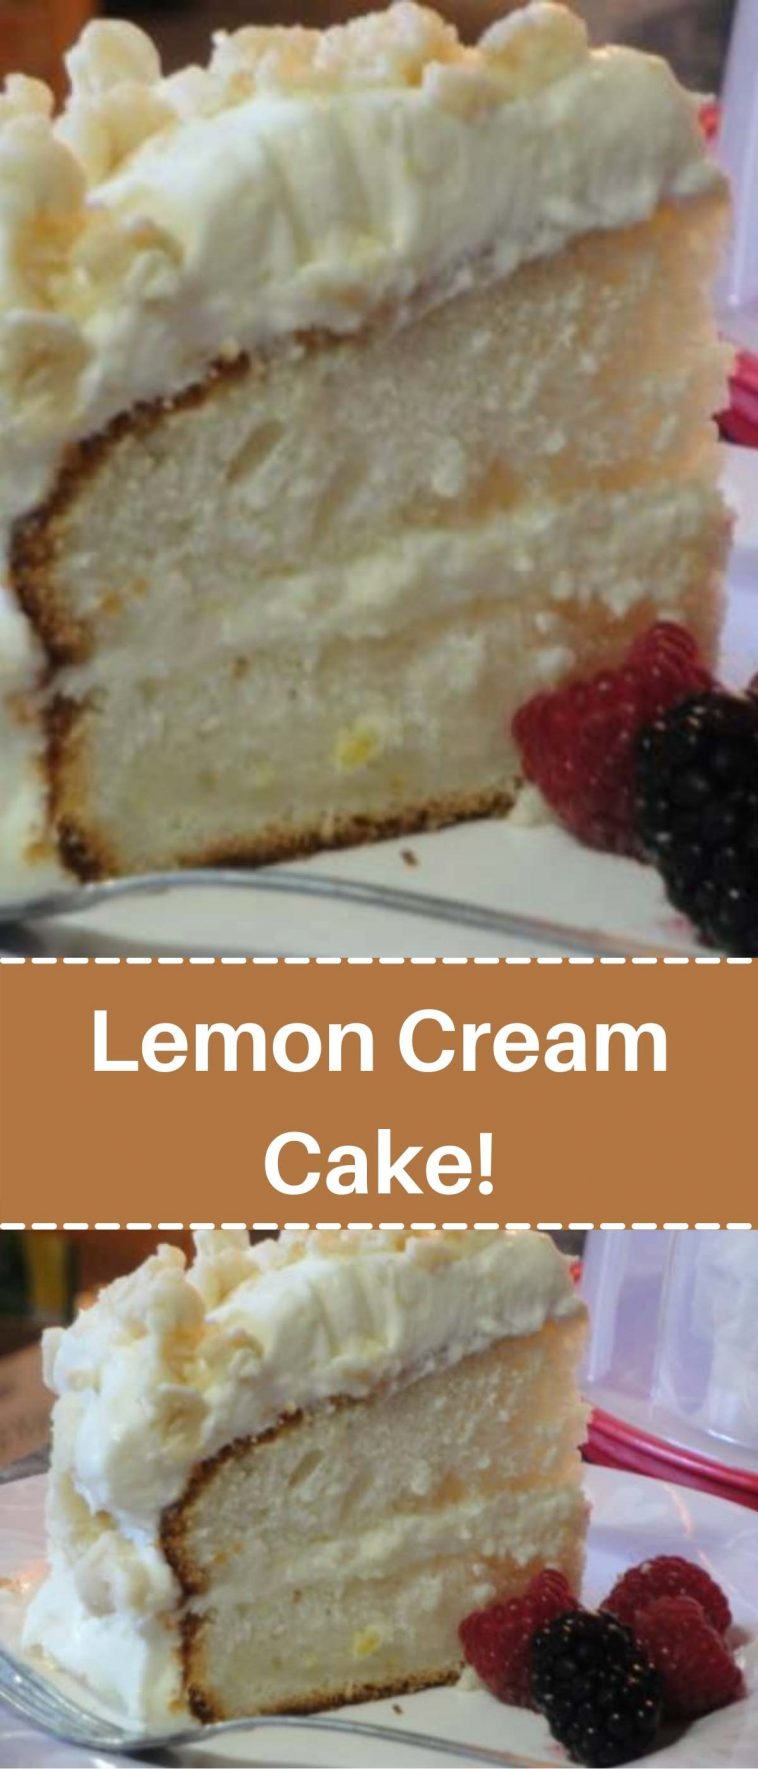 Lemon Cream Cake!